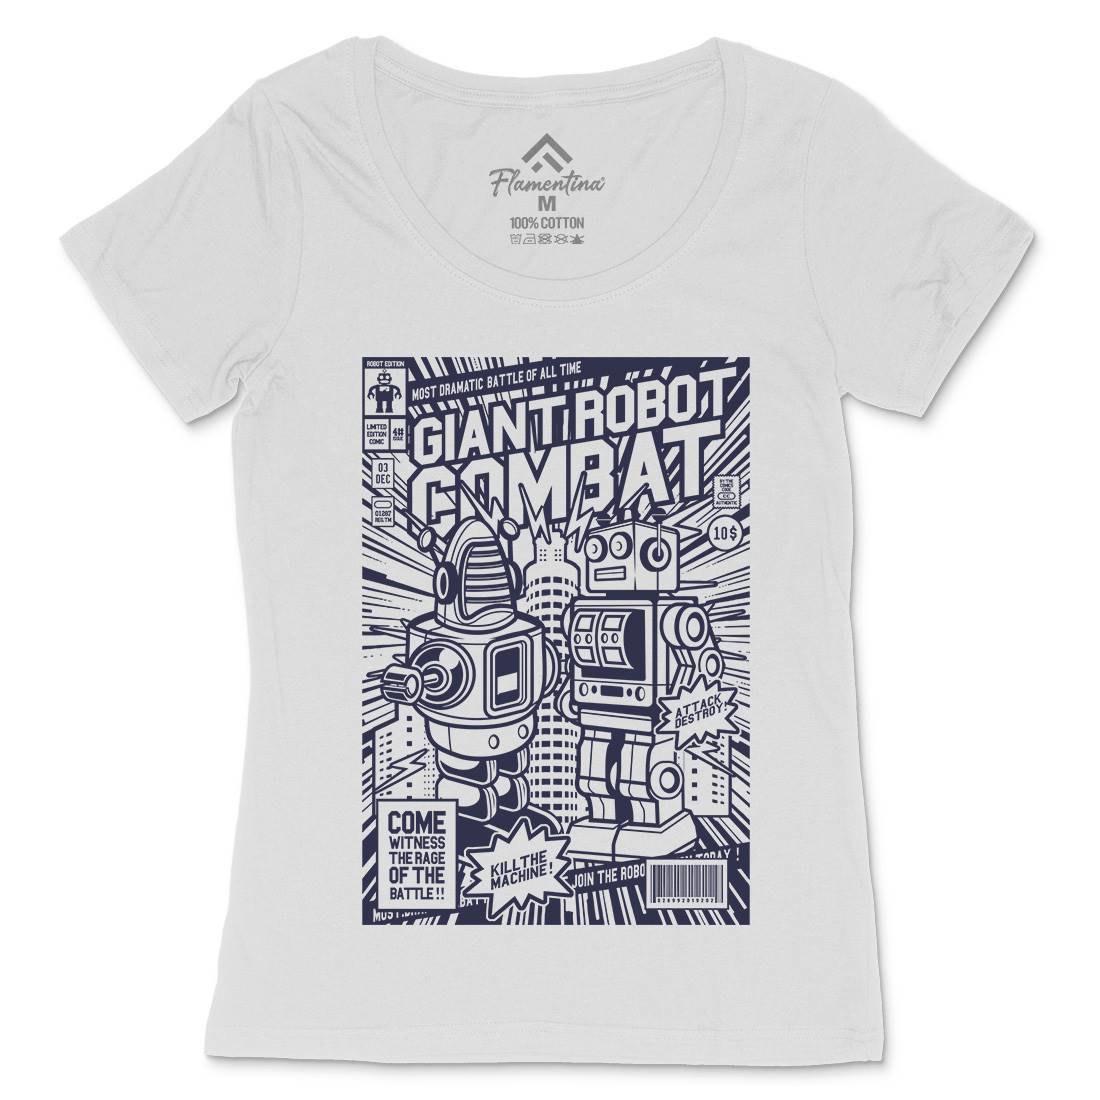 Giant Robot Combat Womens Scoop Neck T-Shirt Space A233